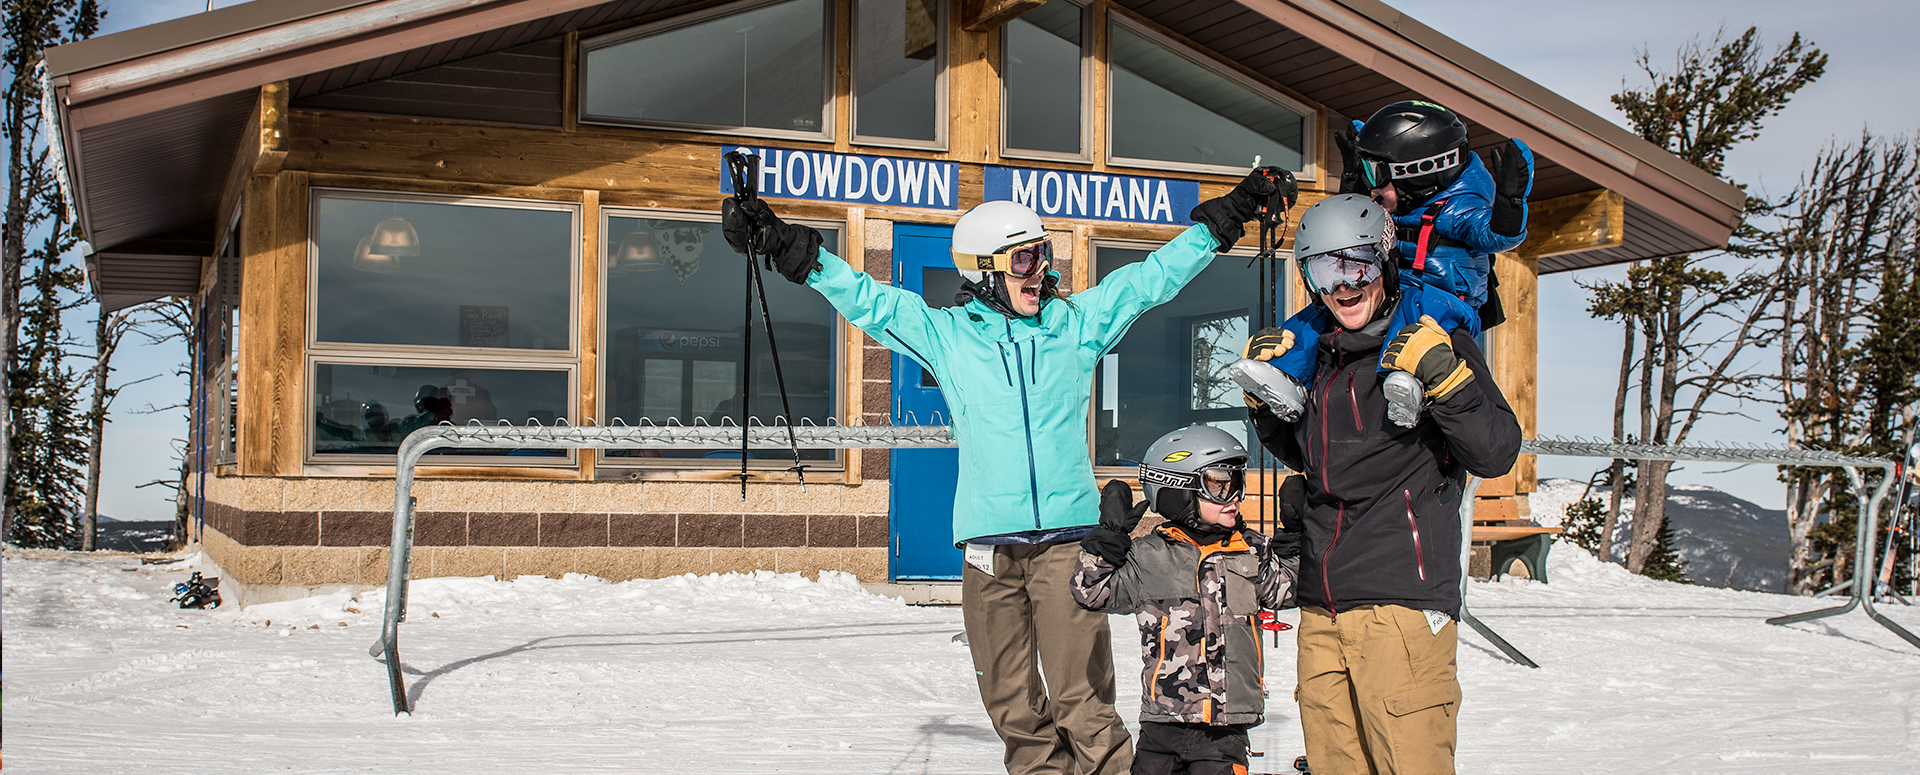 The Showdown Montana ski resort is just a 60-minute drive from Great Falls. Photo courtesy Showdown Montana.